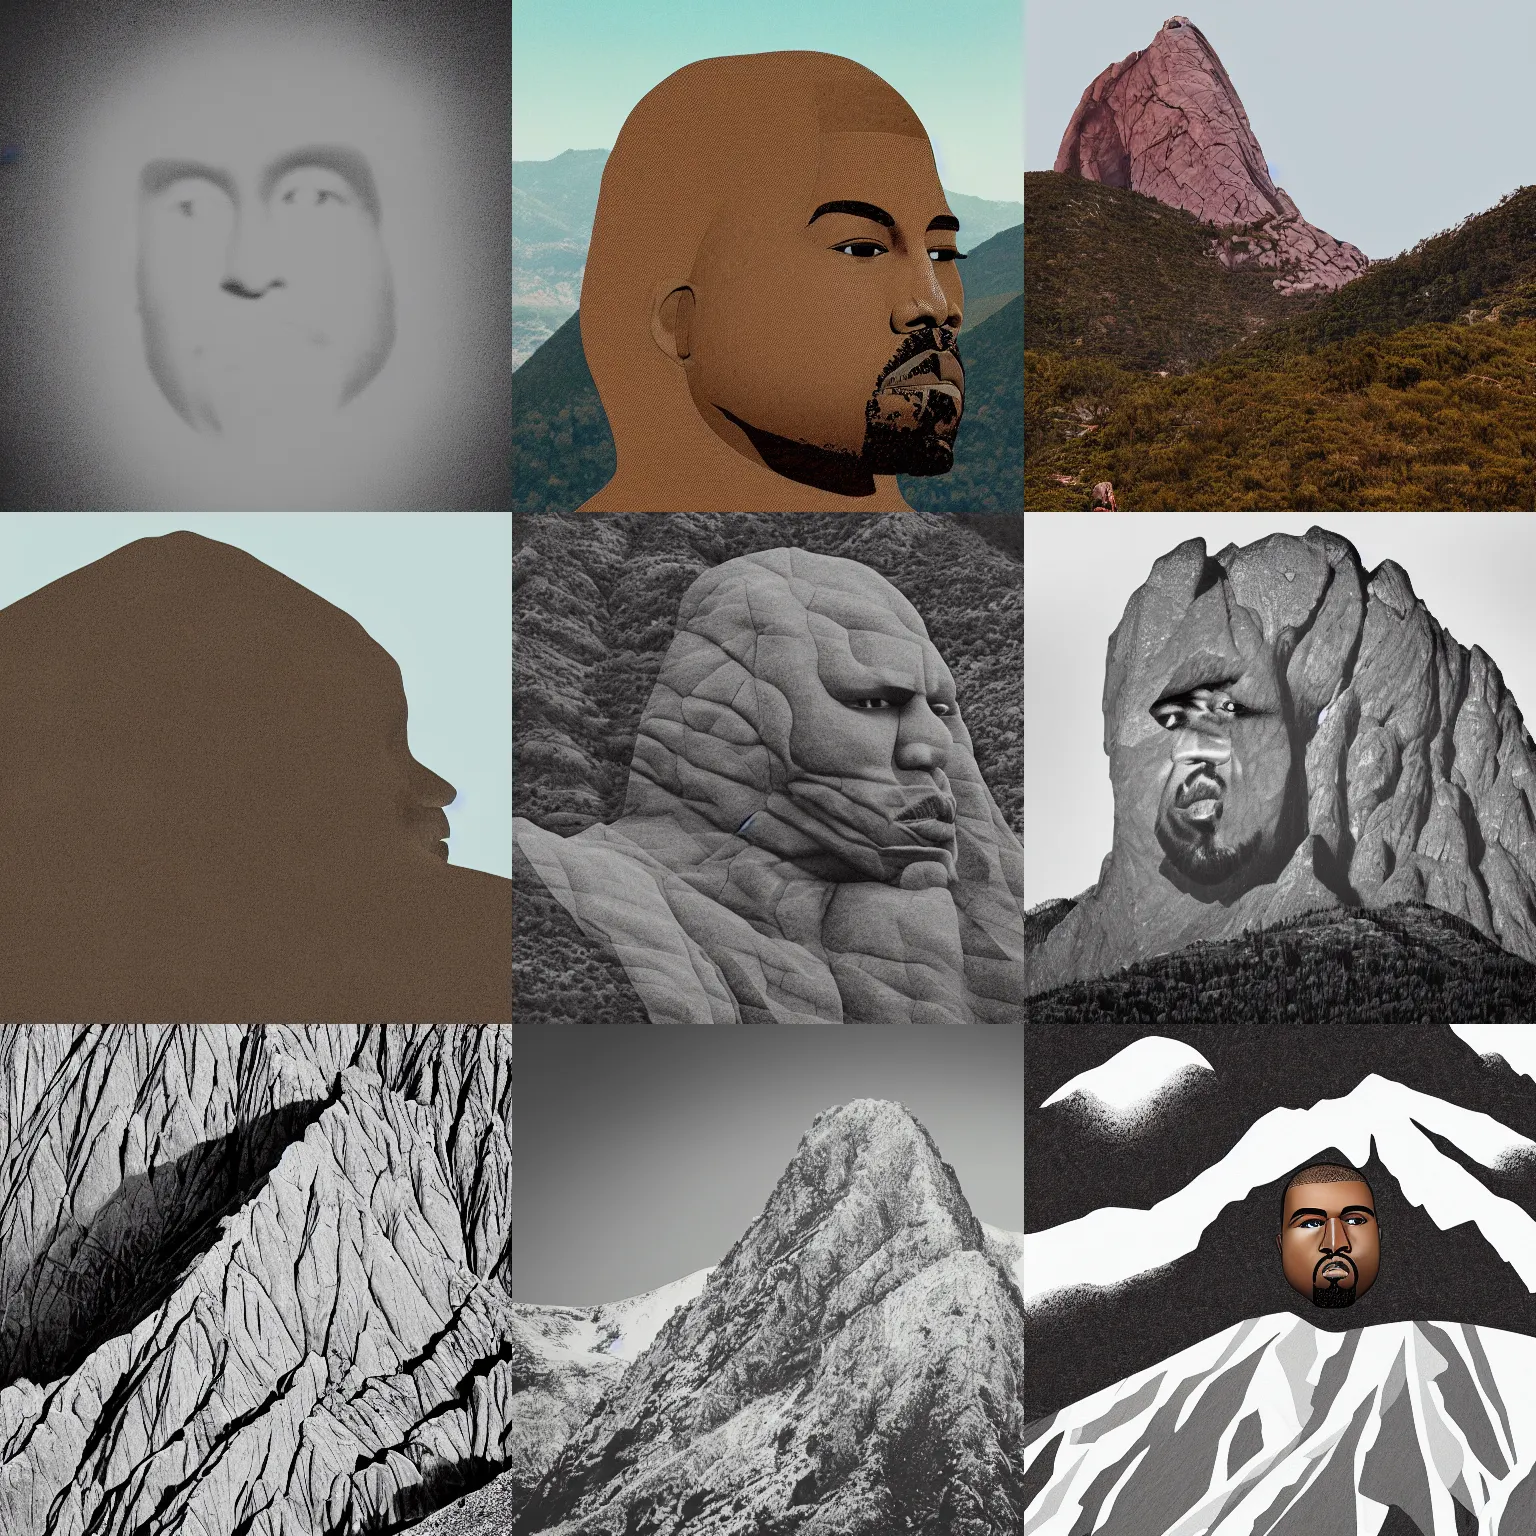 Prompt: Mountain shaped like Kanye West's head, landscape portrait photograph